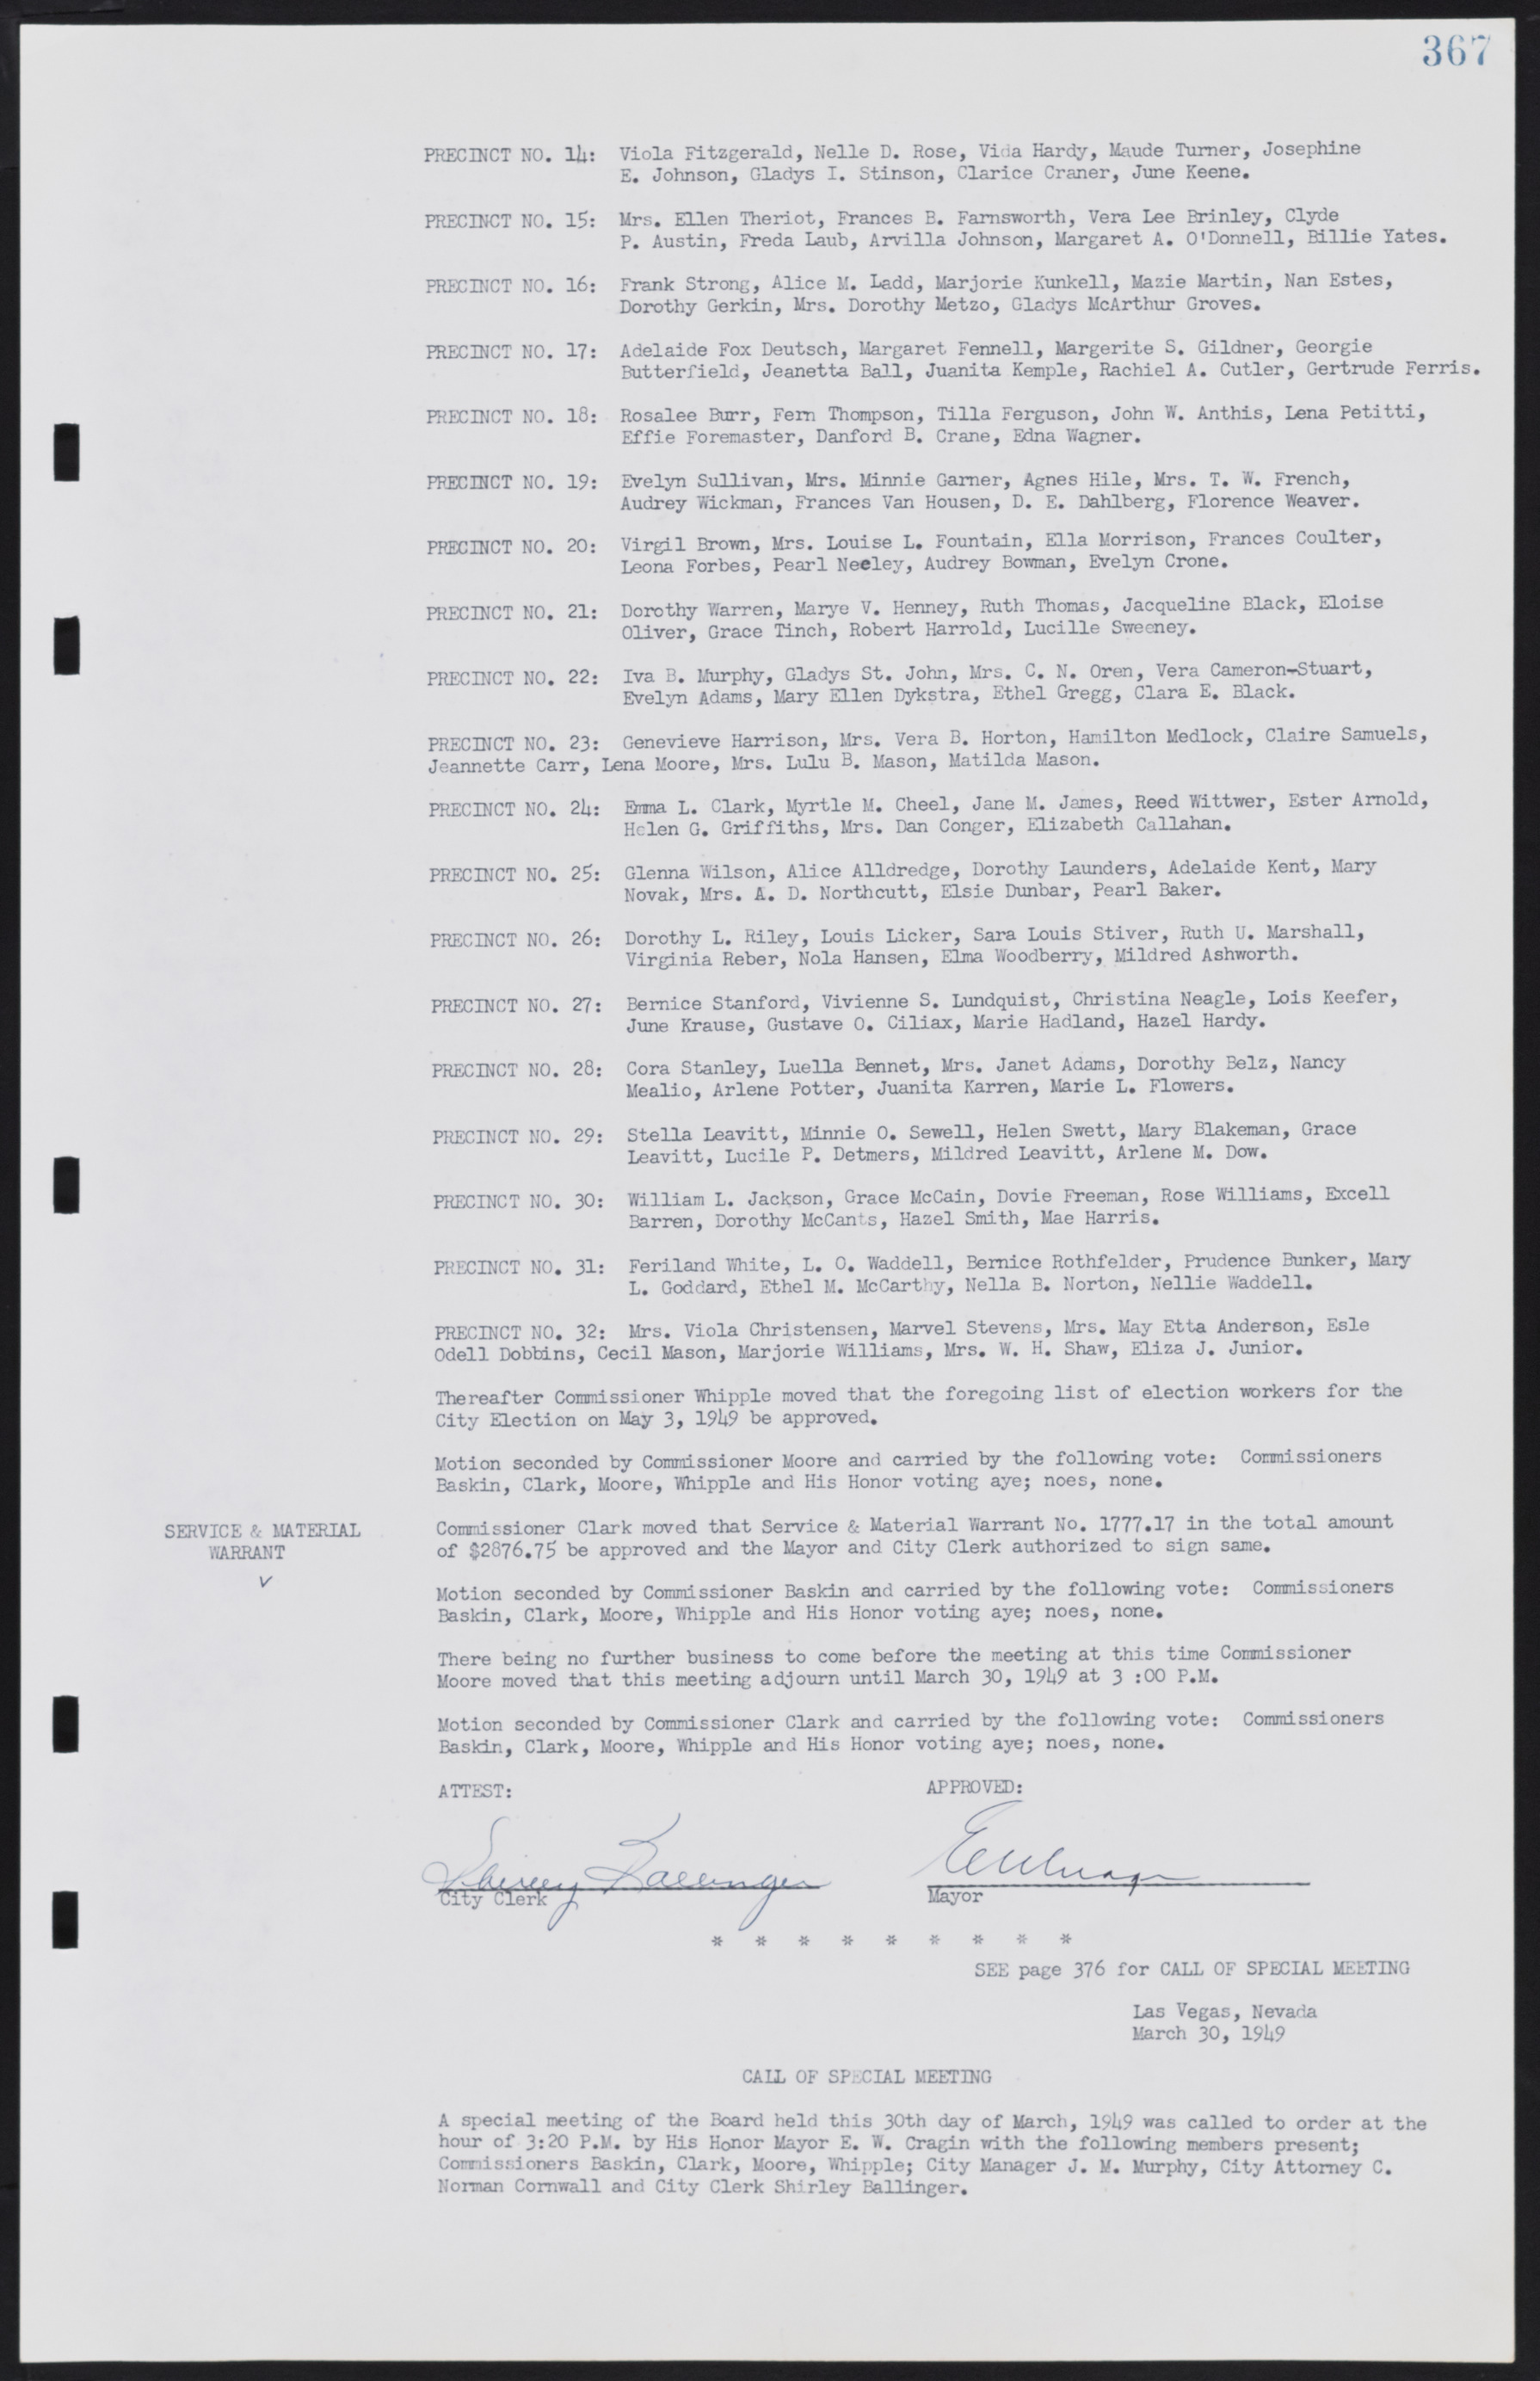 Las Vegas City Commission Minutes, January 7, 1947 to October 26, 1949, lvc000006-397